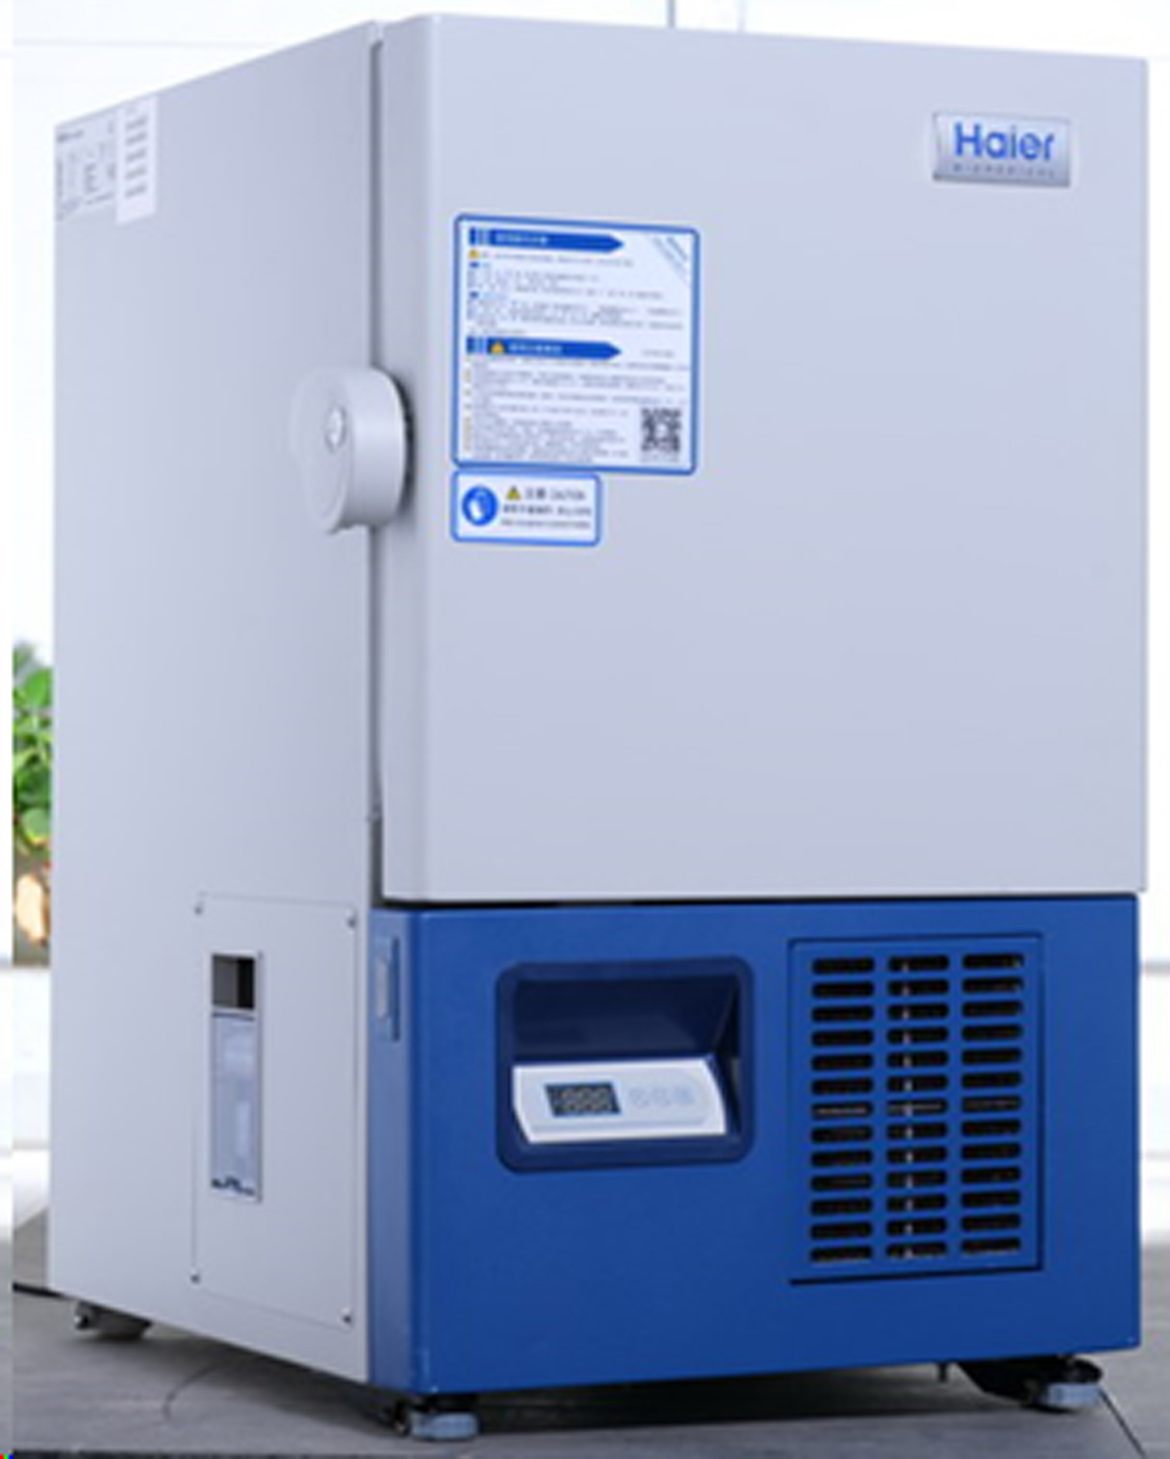 Produktfoto: HAIER -86°C Ultratiefkühlschrank, 51 Liter, Energiesparmodell DW-86L51J